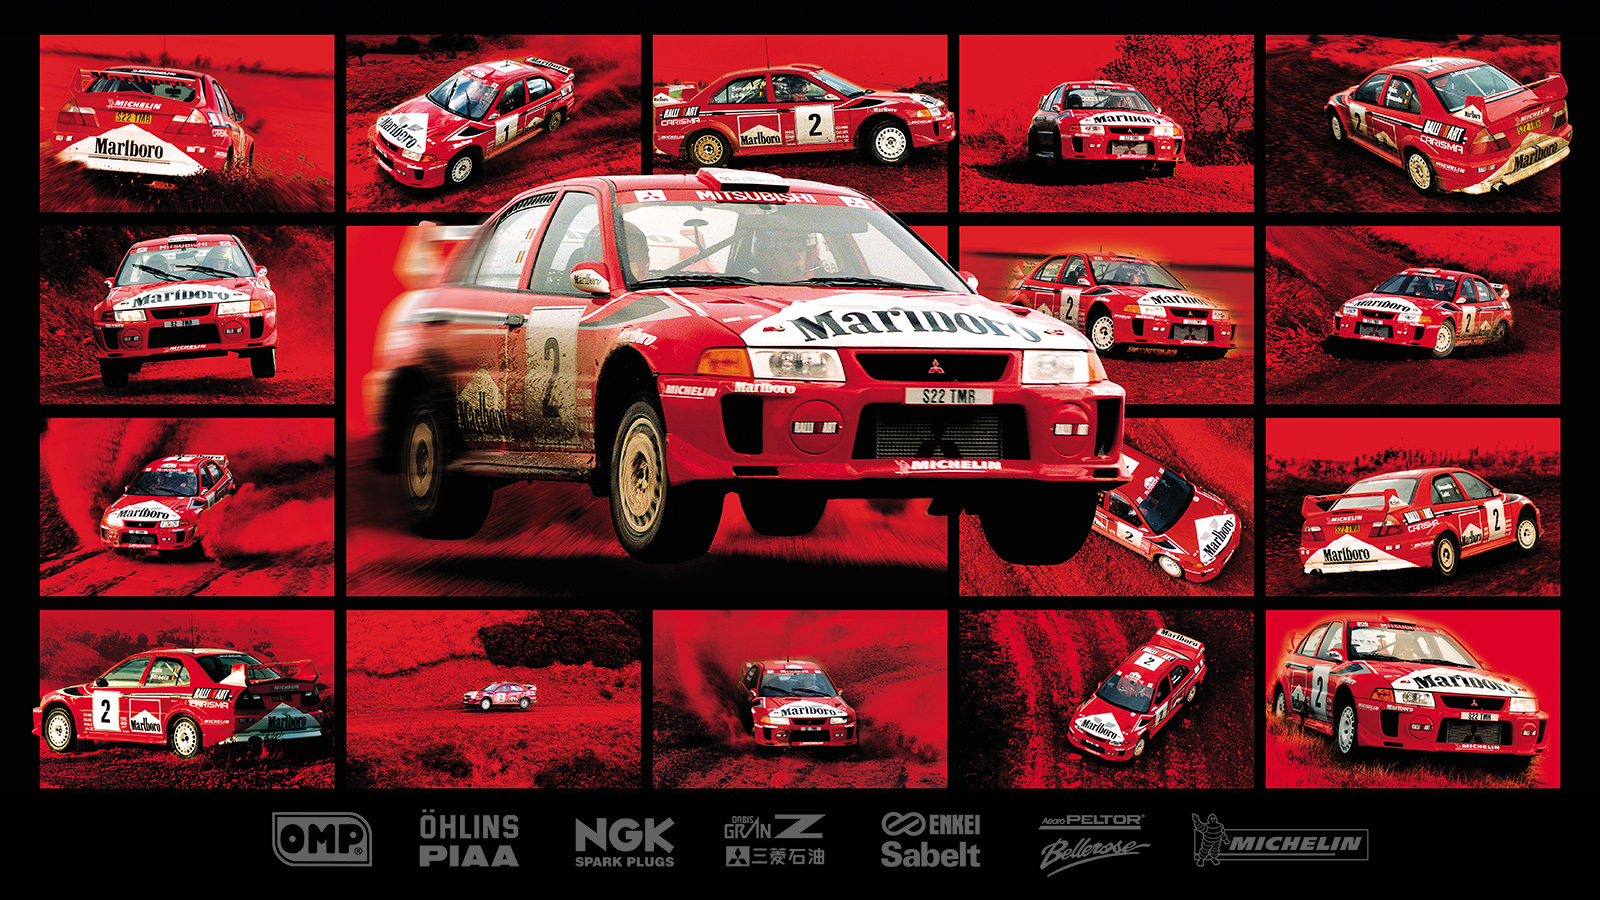 WRC Mitsubishi - Marlboro - Ralliart original branding